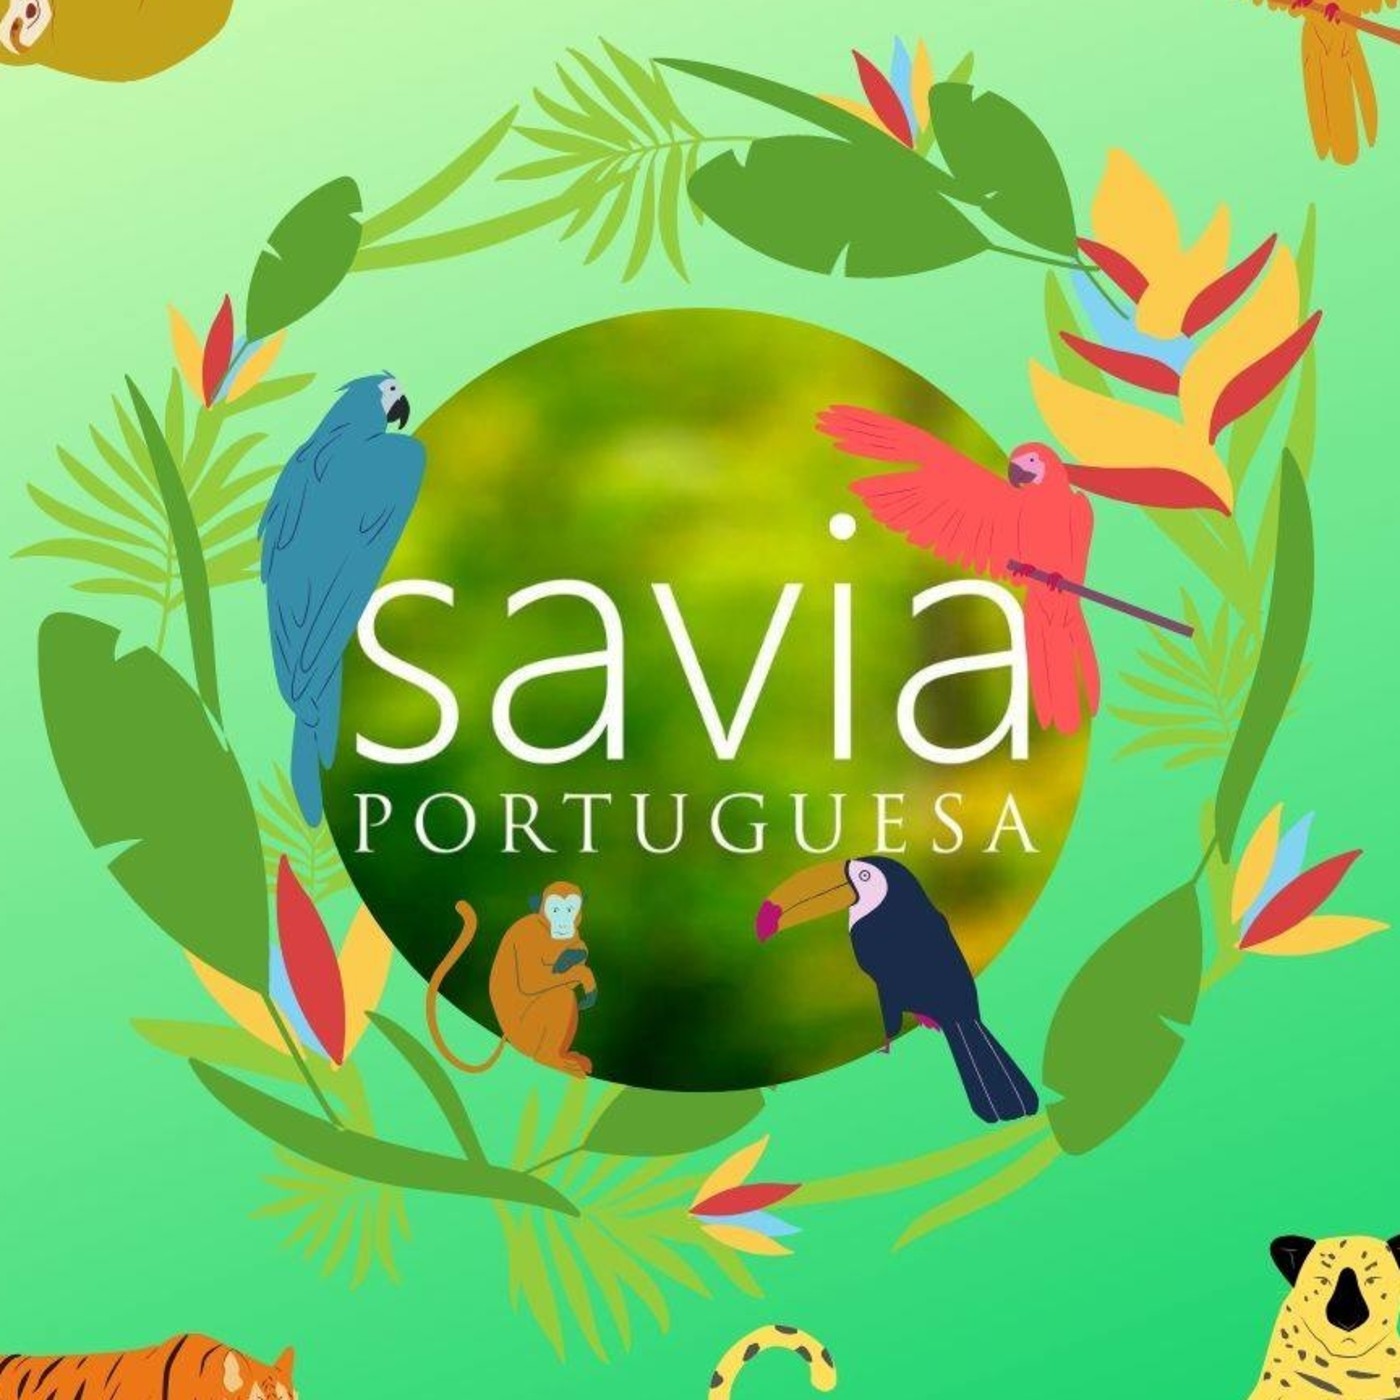 Savia Portuguesa